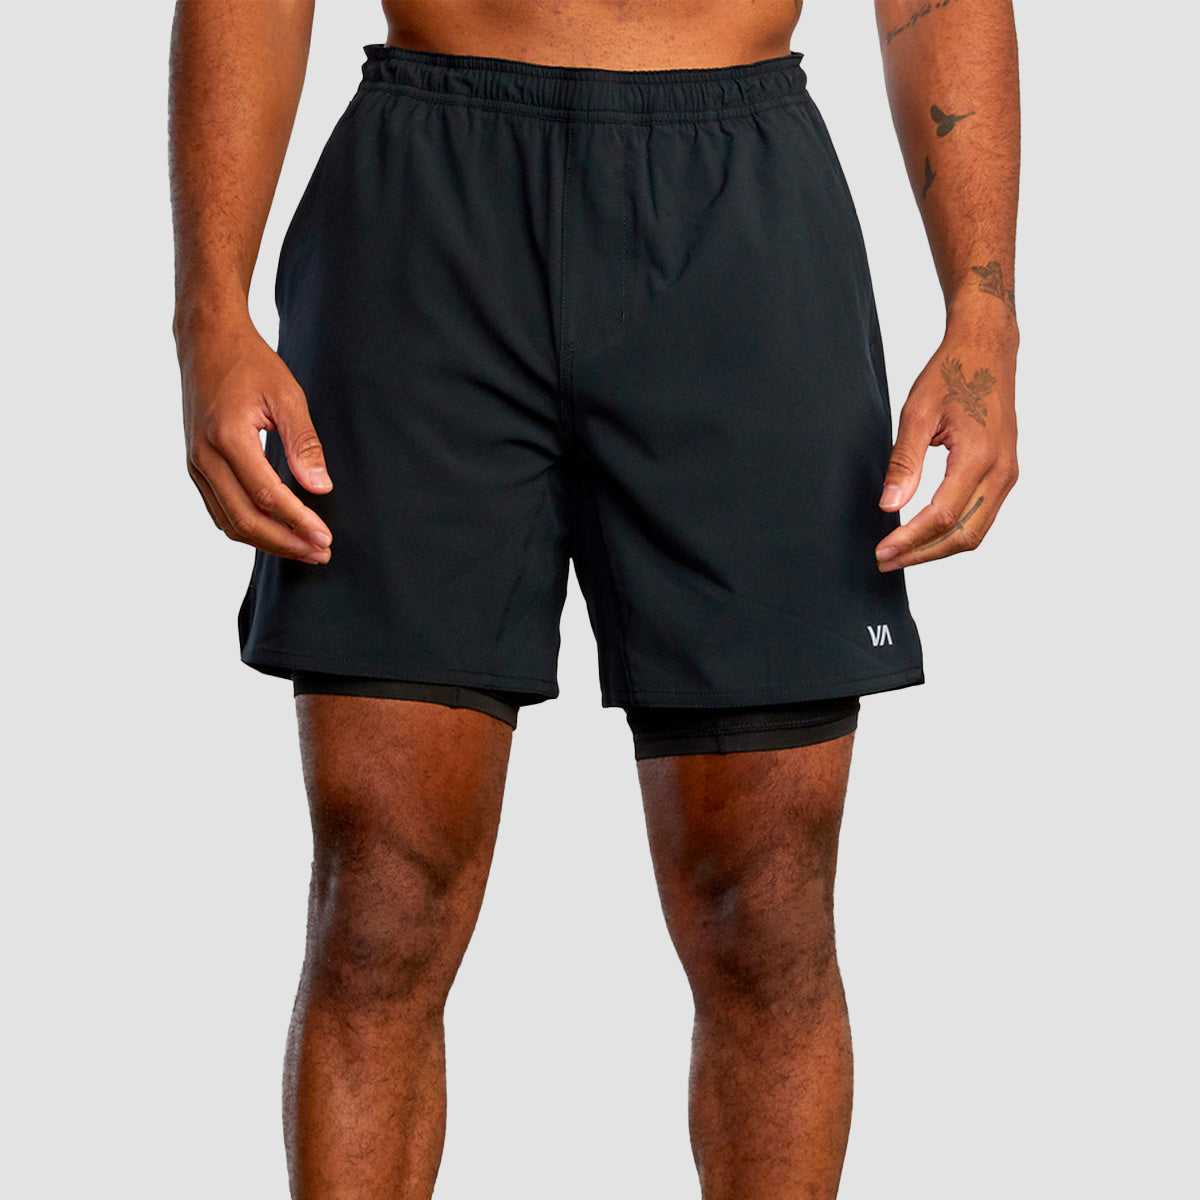 RVCA VA Sport Yogger 17" 2-in-1 Training Shorts Black Multi